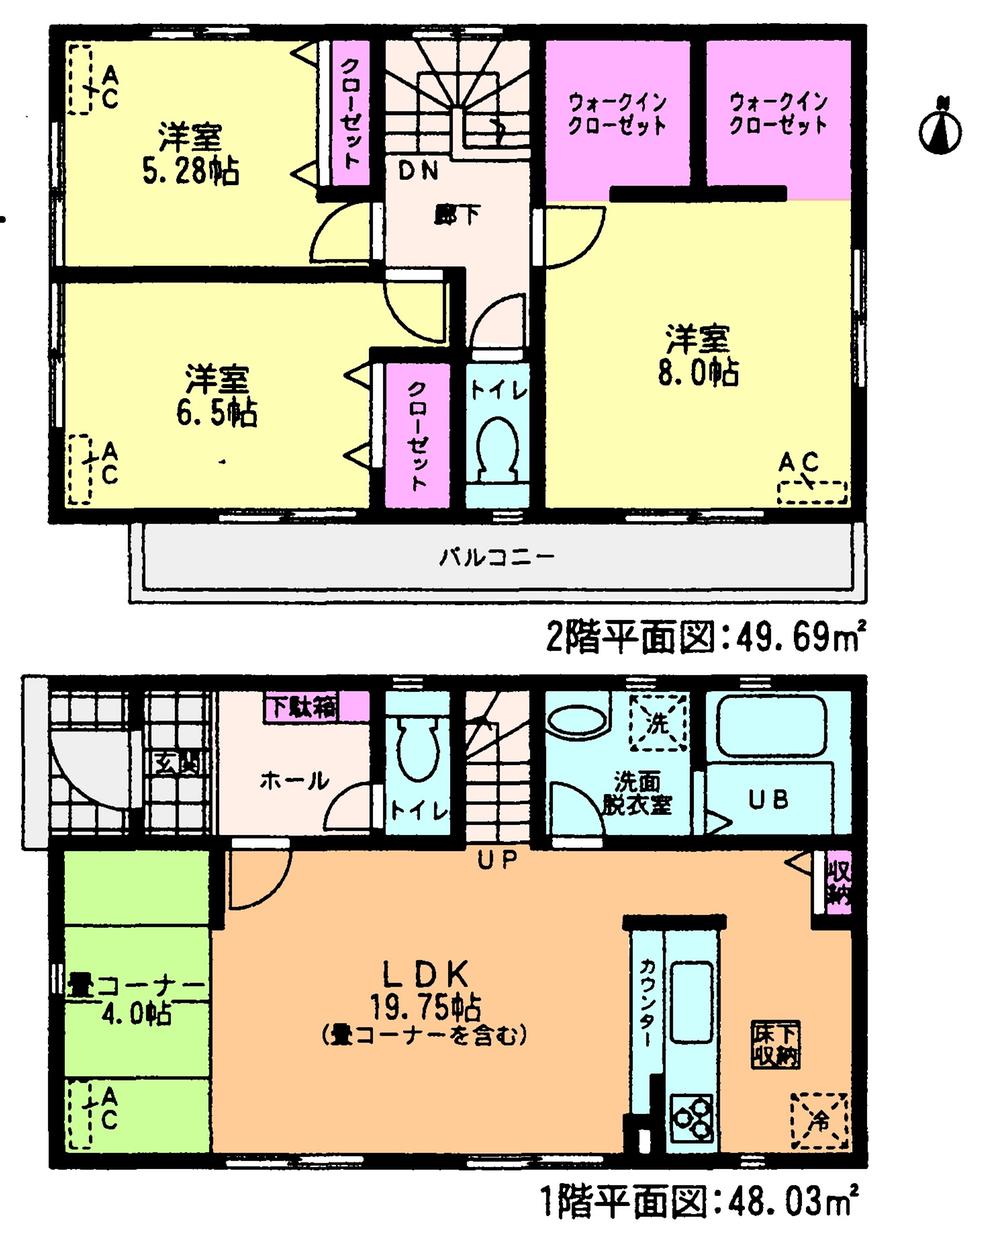 Floor plan. (1 Building), Price 33,500,000 yen, 3LDK, Land area 127.01 sq m , Building area 97.72 sq m